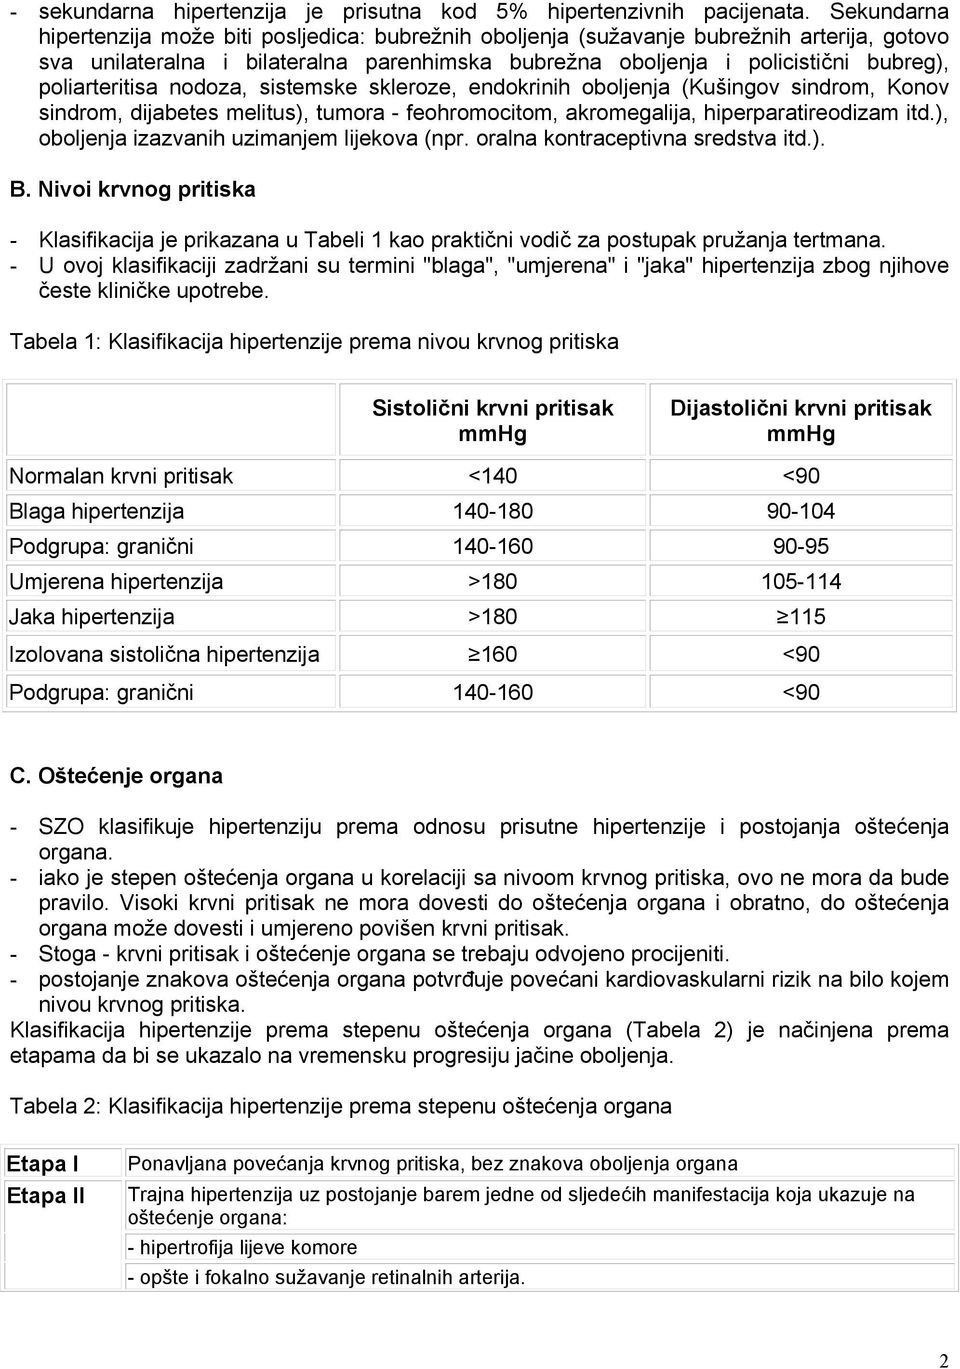 hipertenzija klasifikacija lijek)